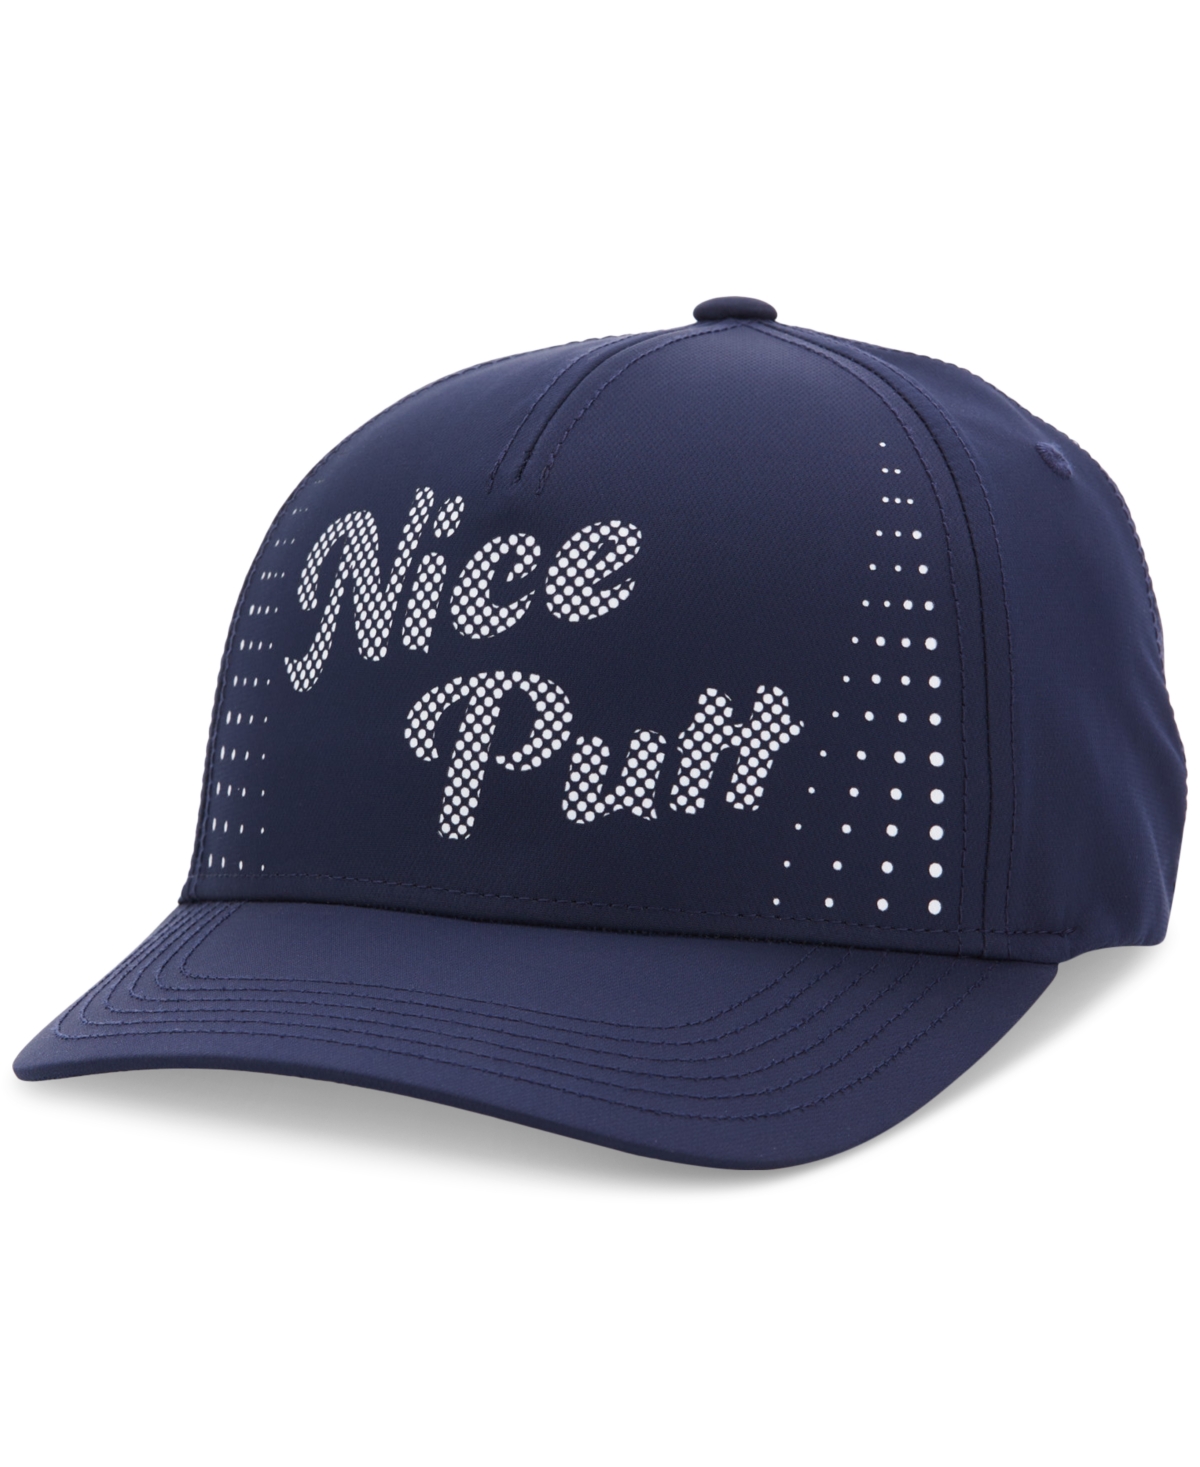 Men's Nice Putt Perforated Golf Cap - Peacoat